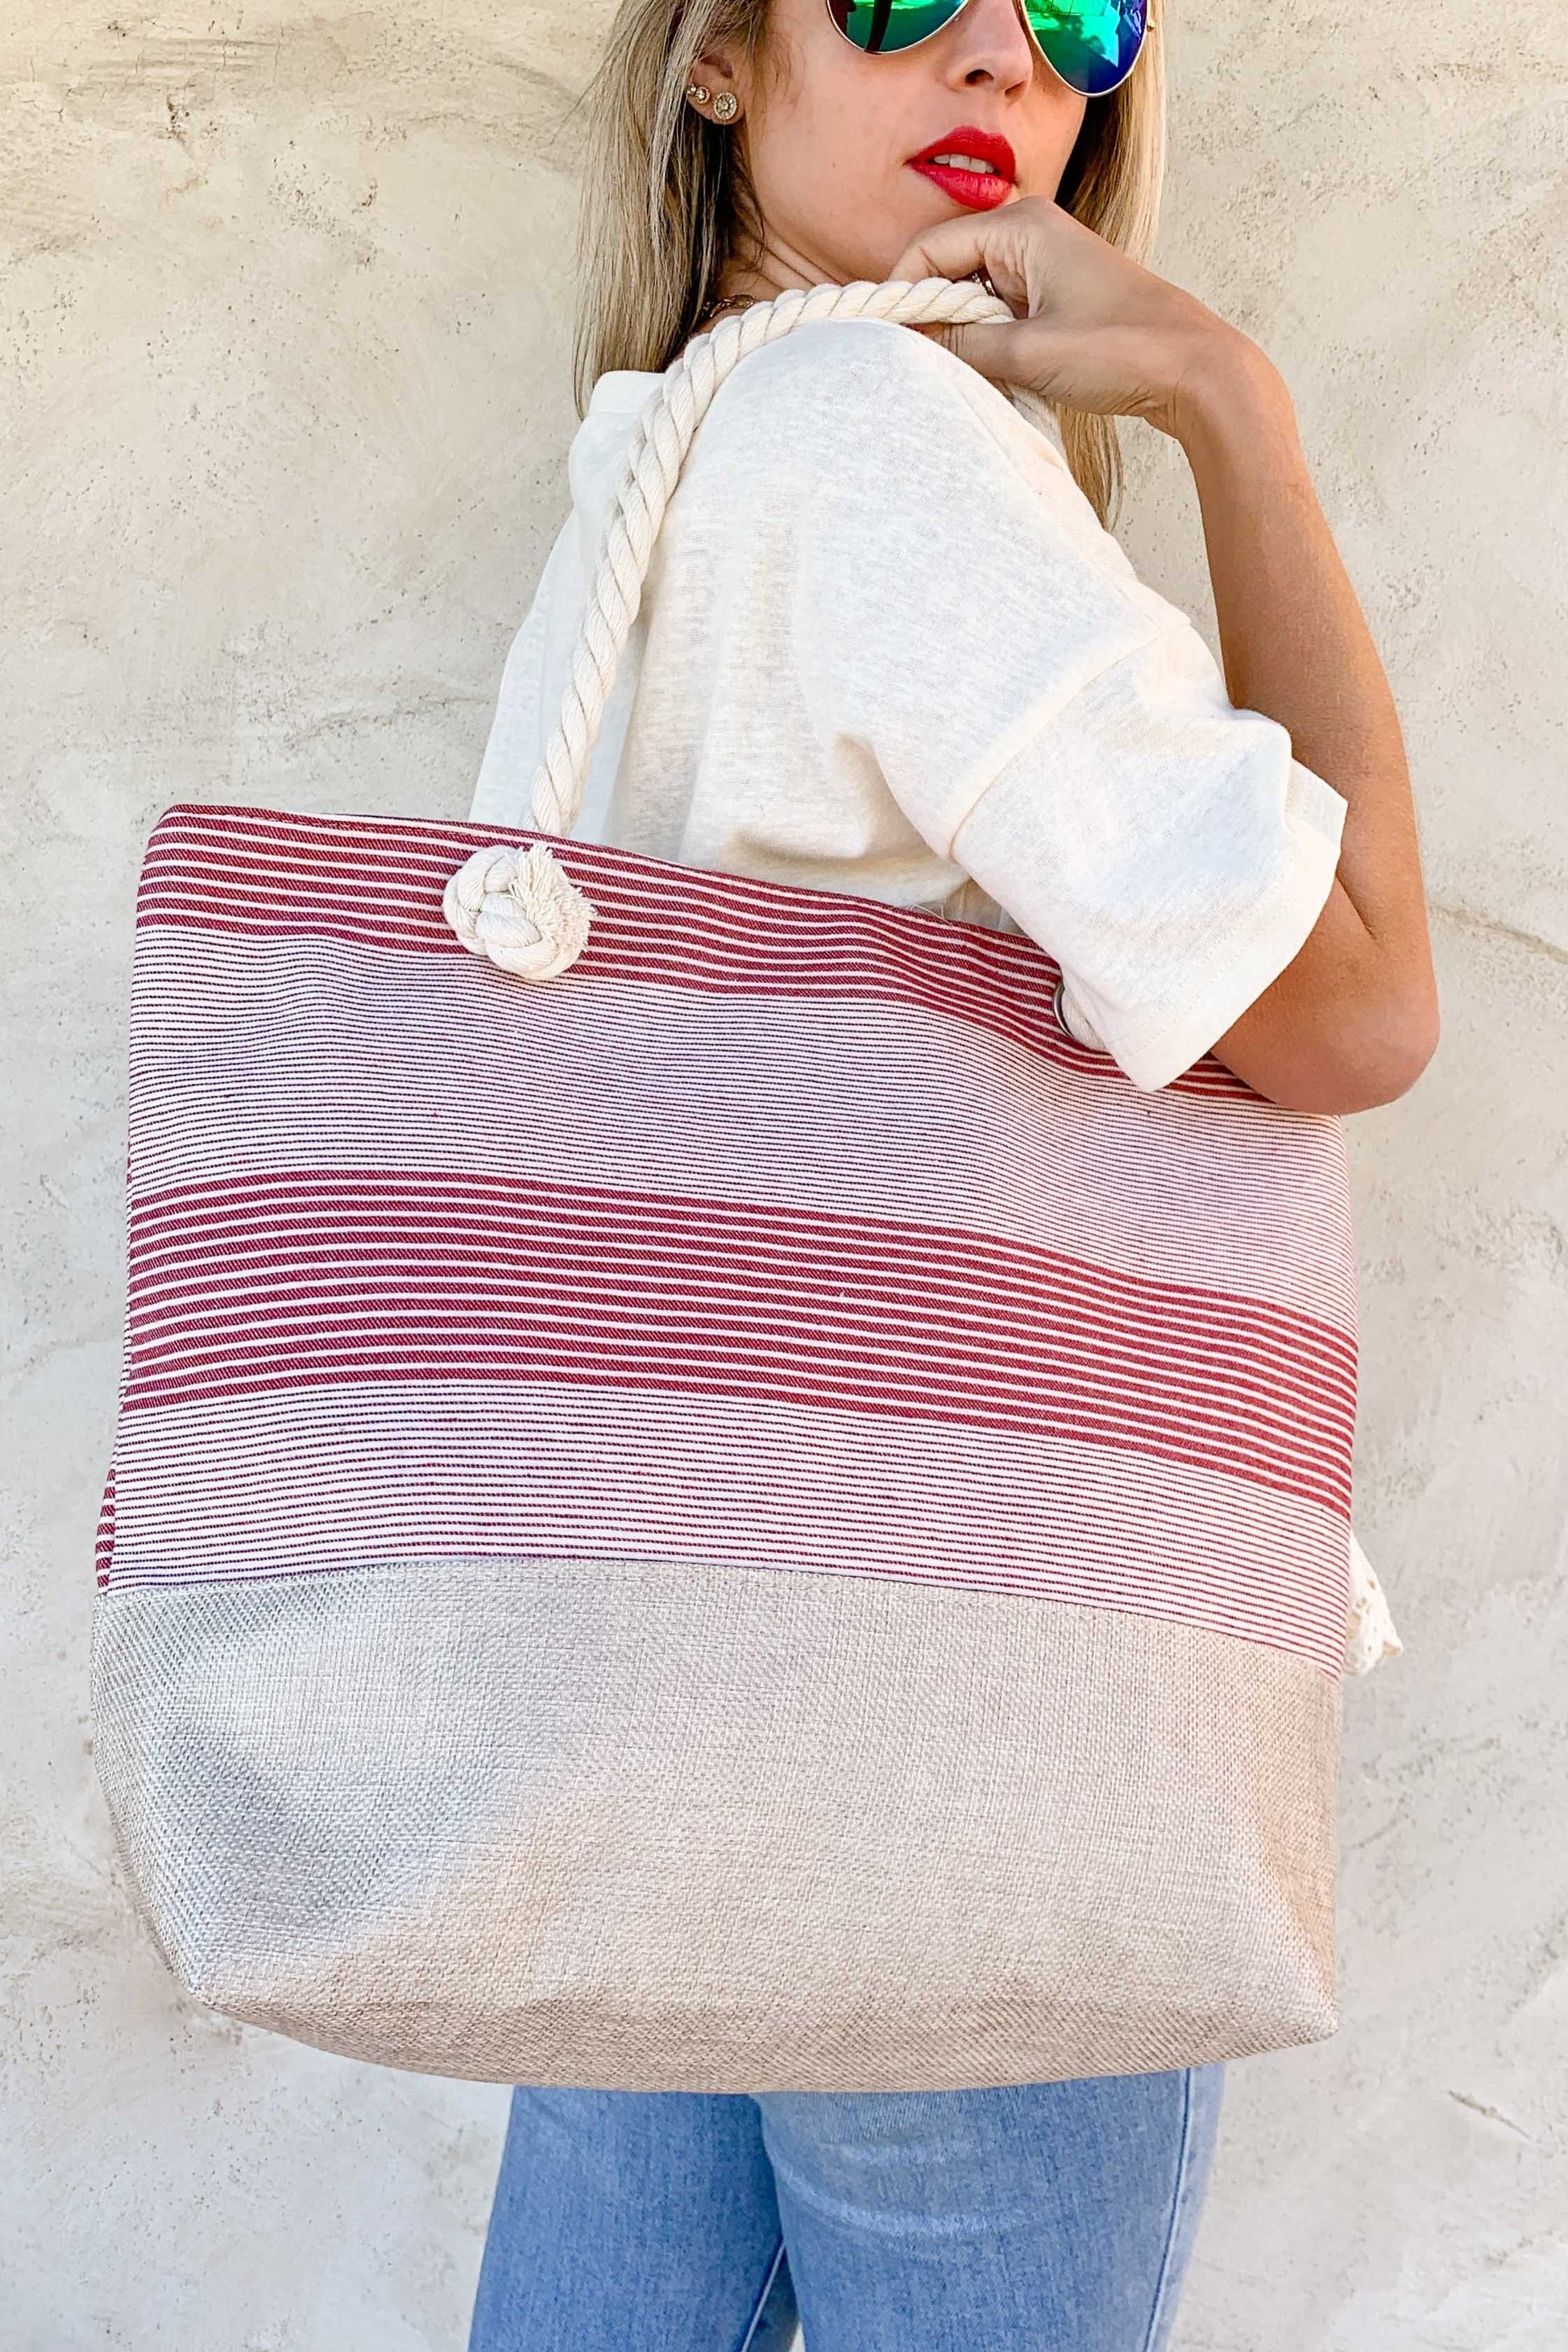 Surf World Beach / Boat Bag - Striped / Printed Bag